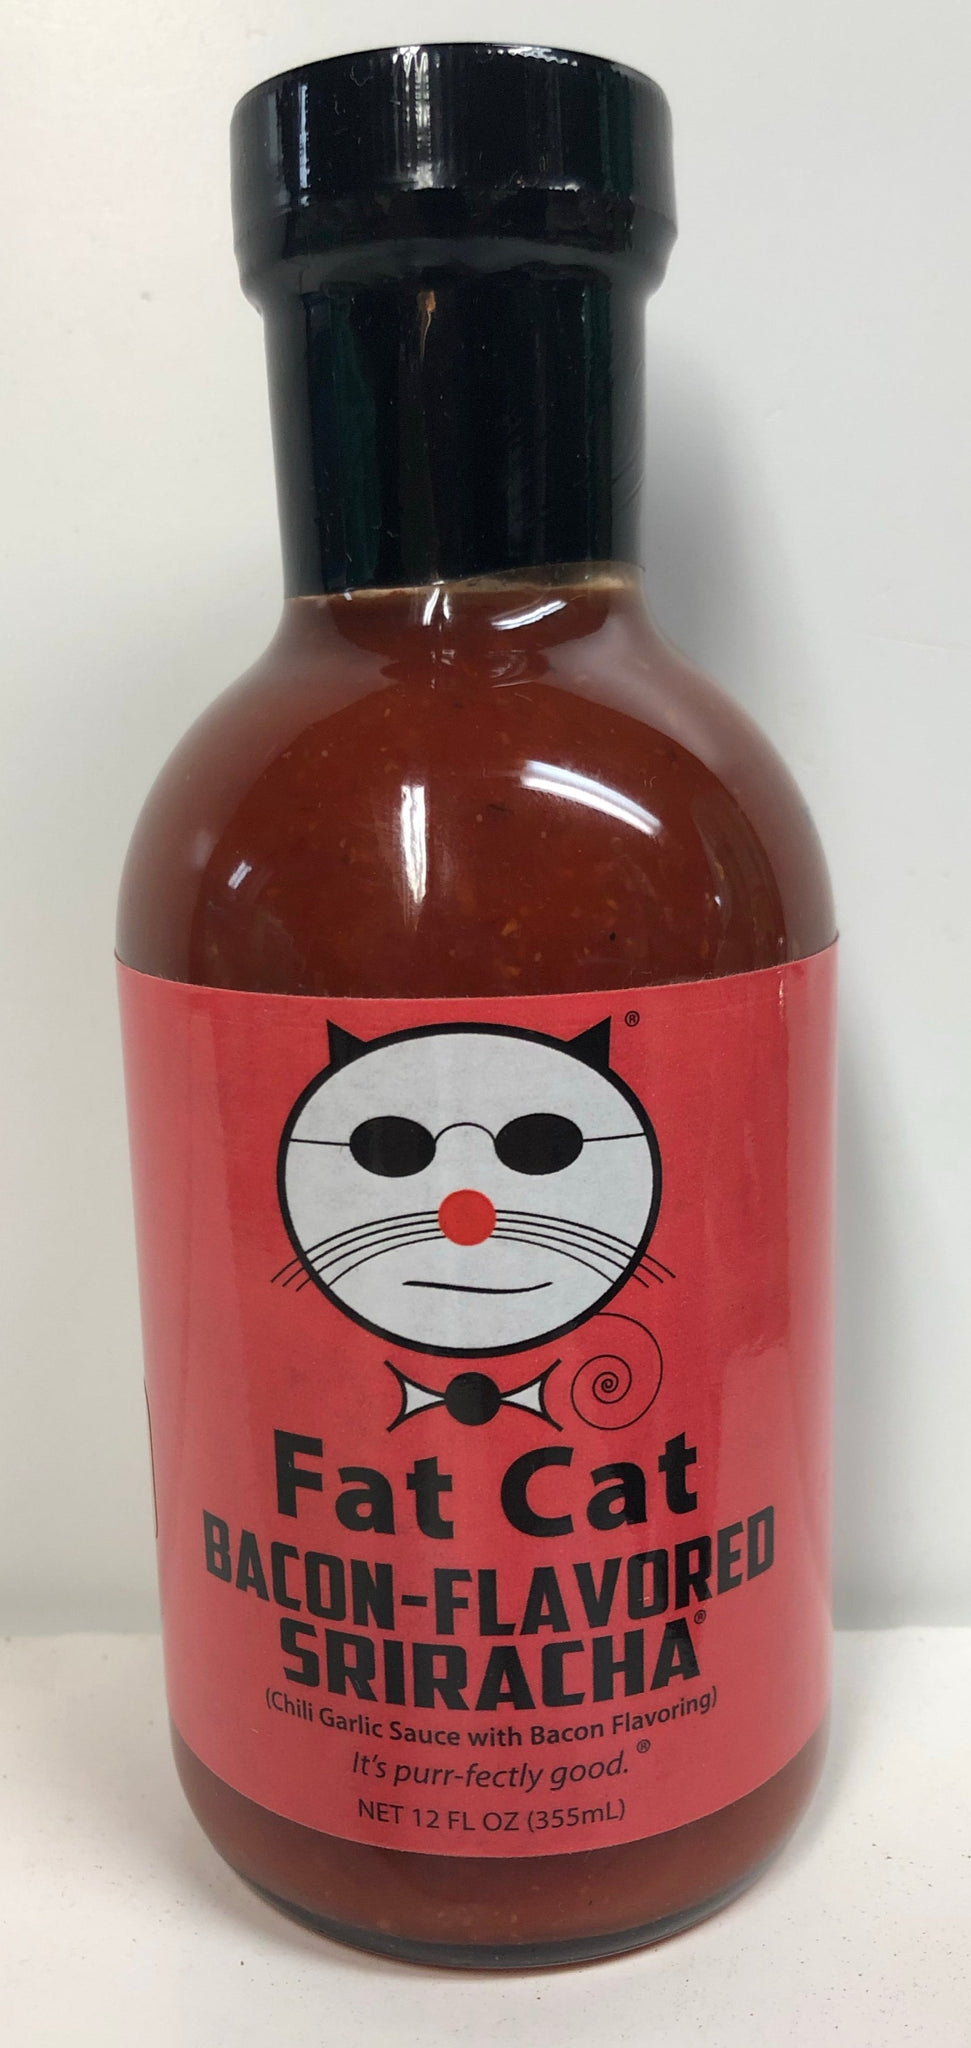 Fat Cat Bacon-Flavored Sriracha Sauce